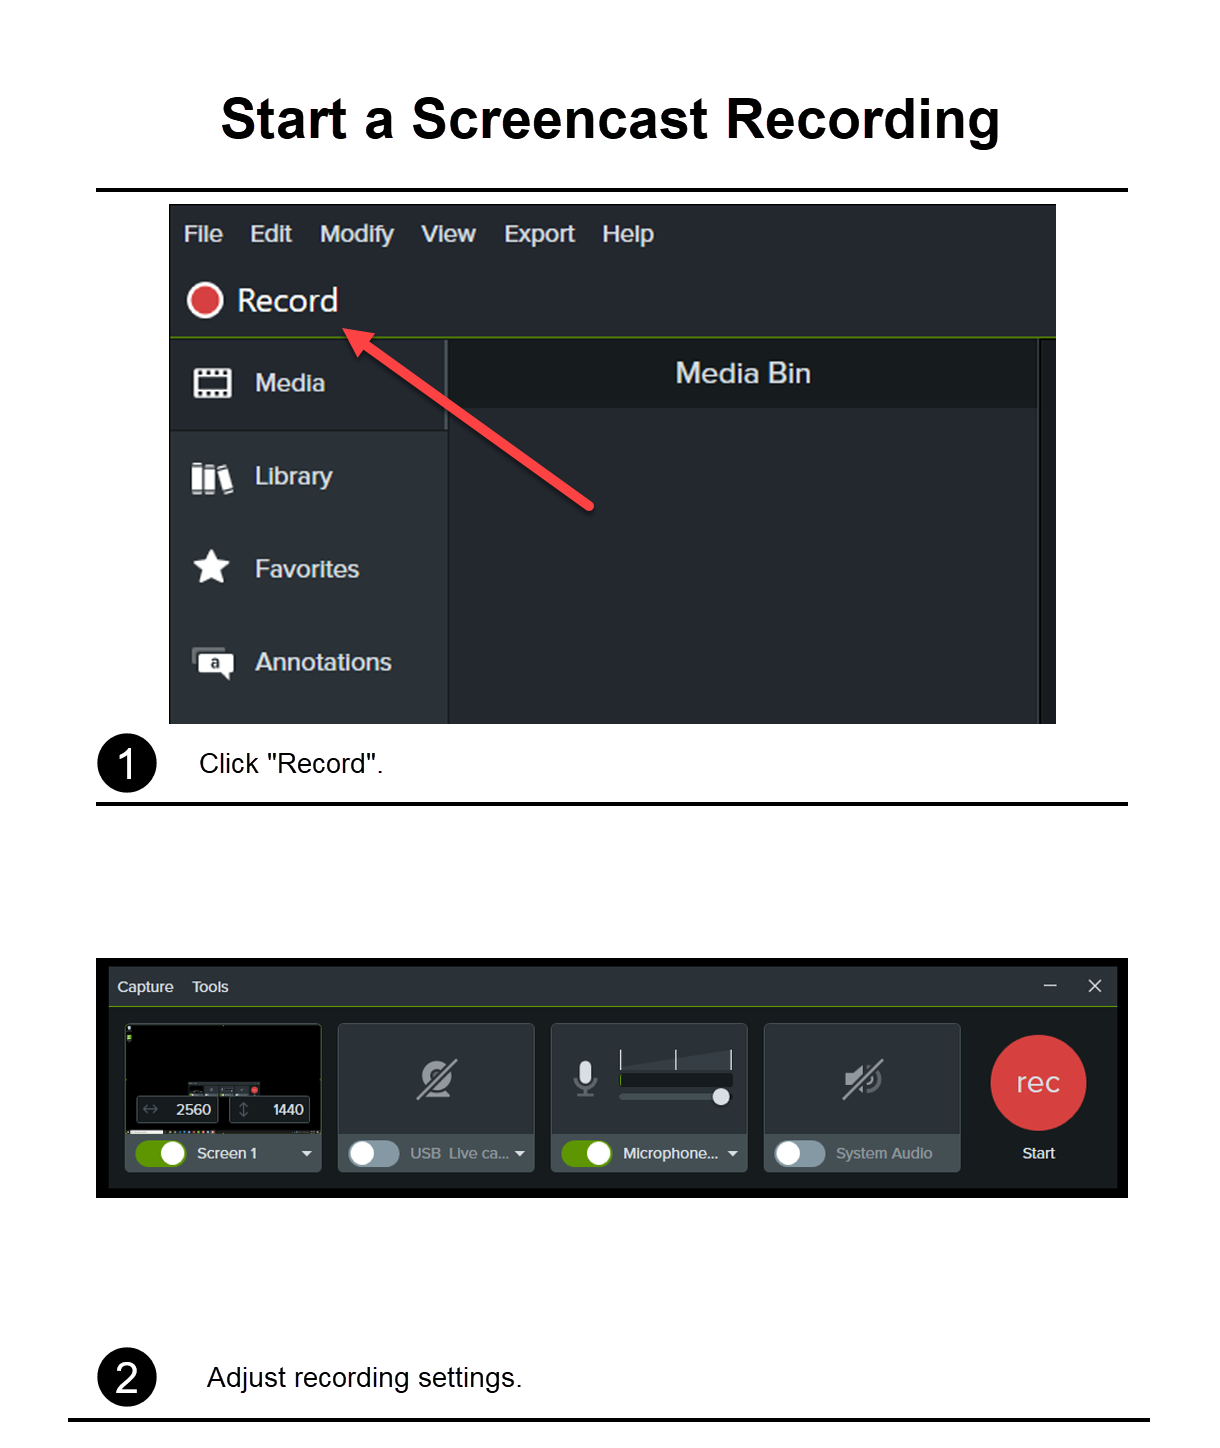 Start a Screencast Recording